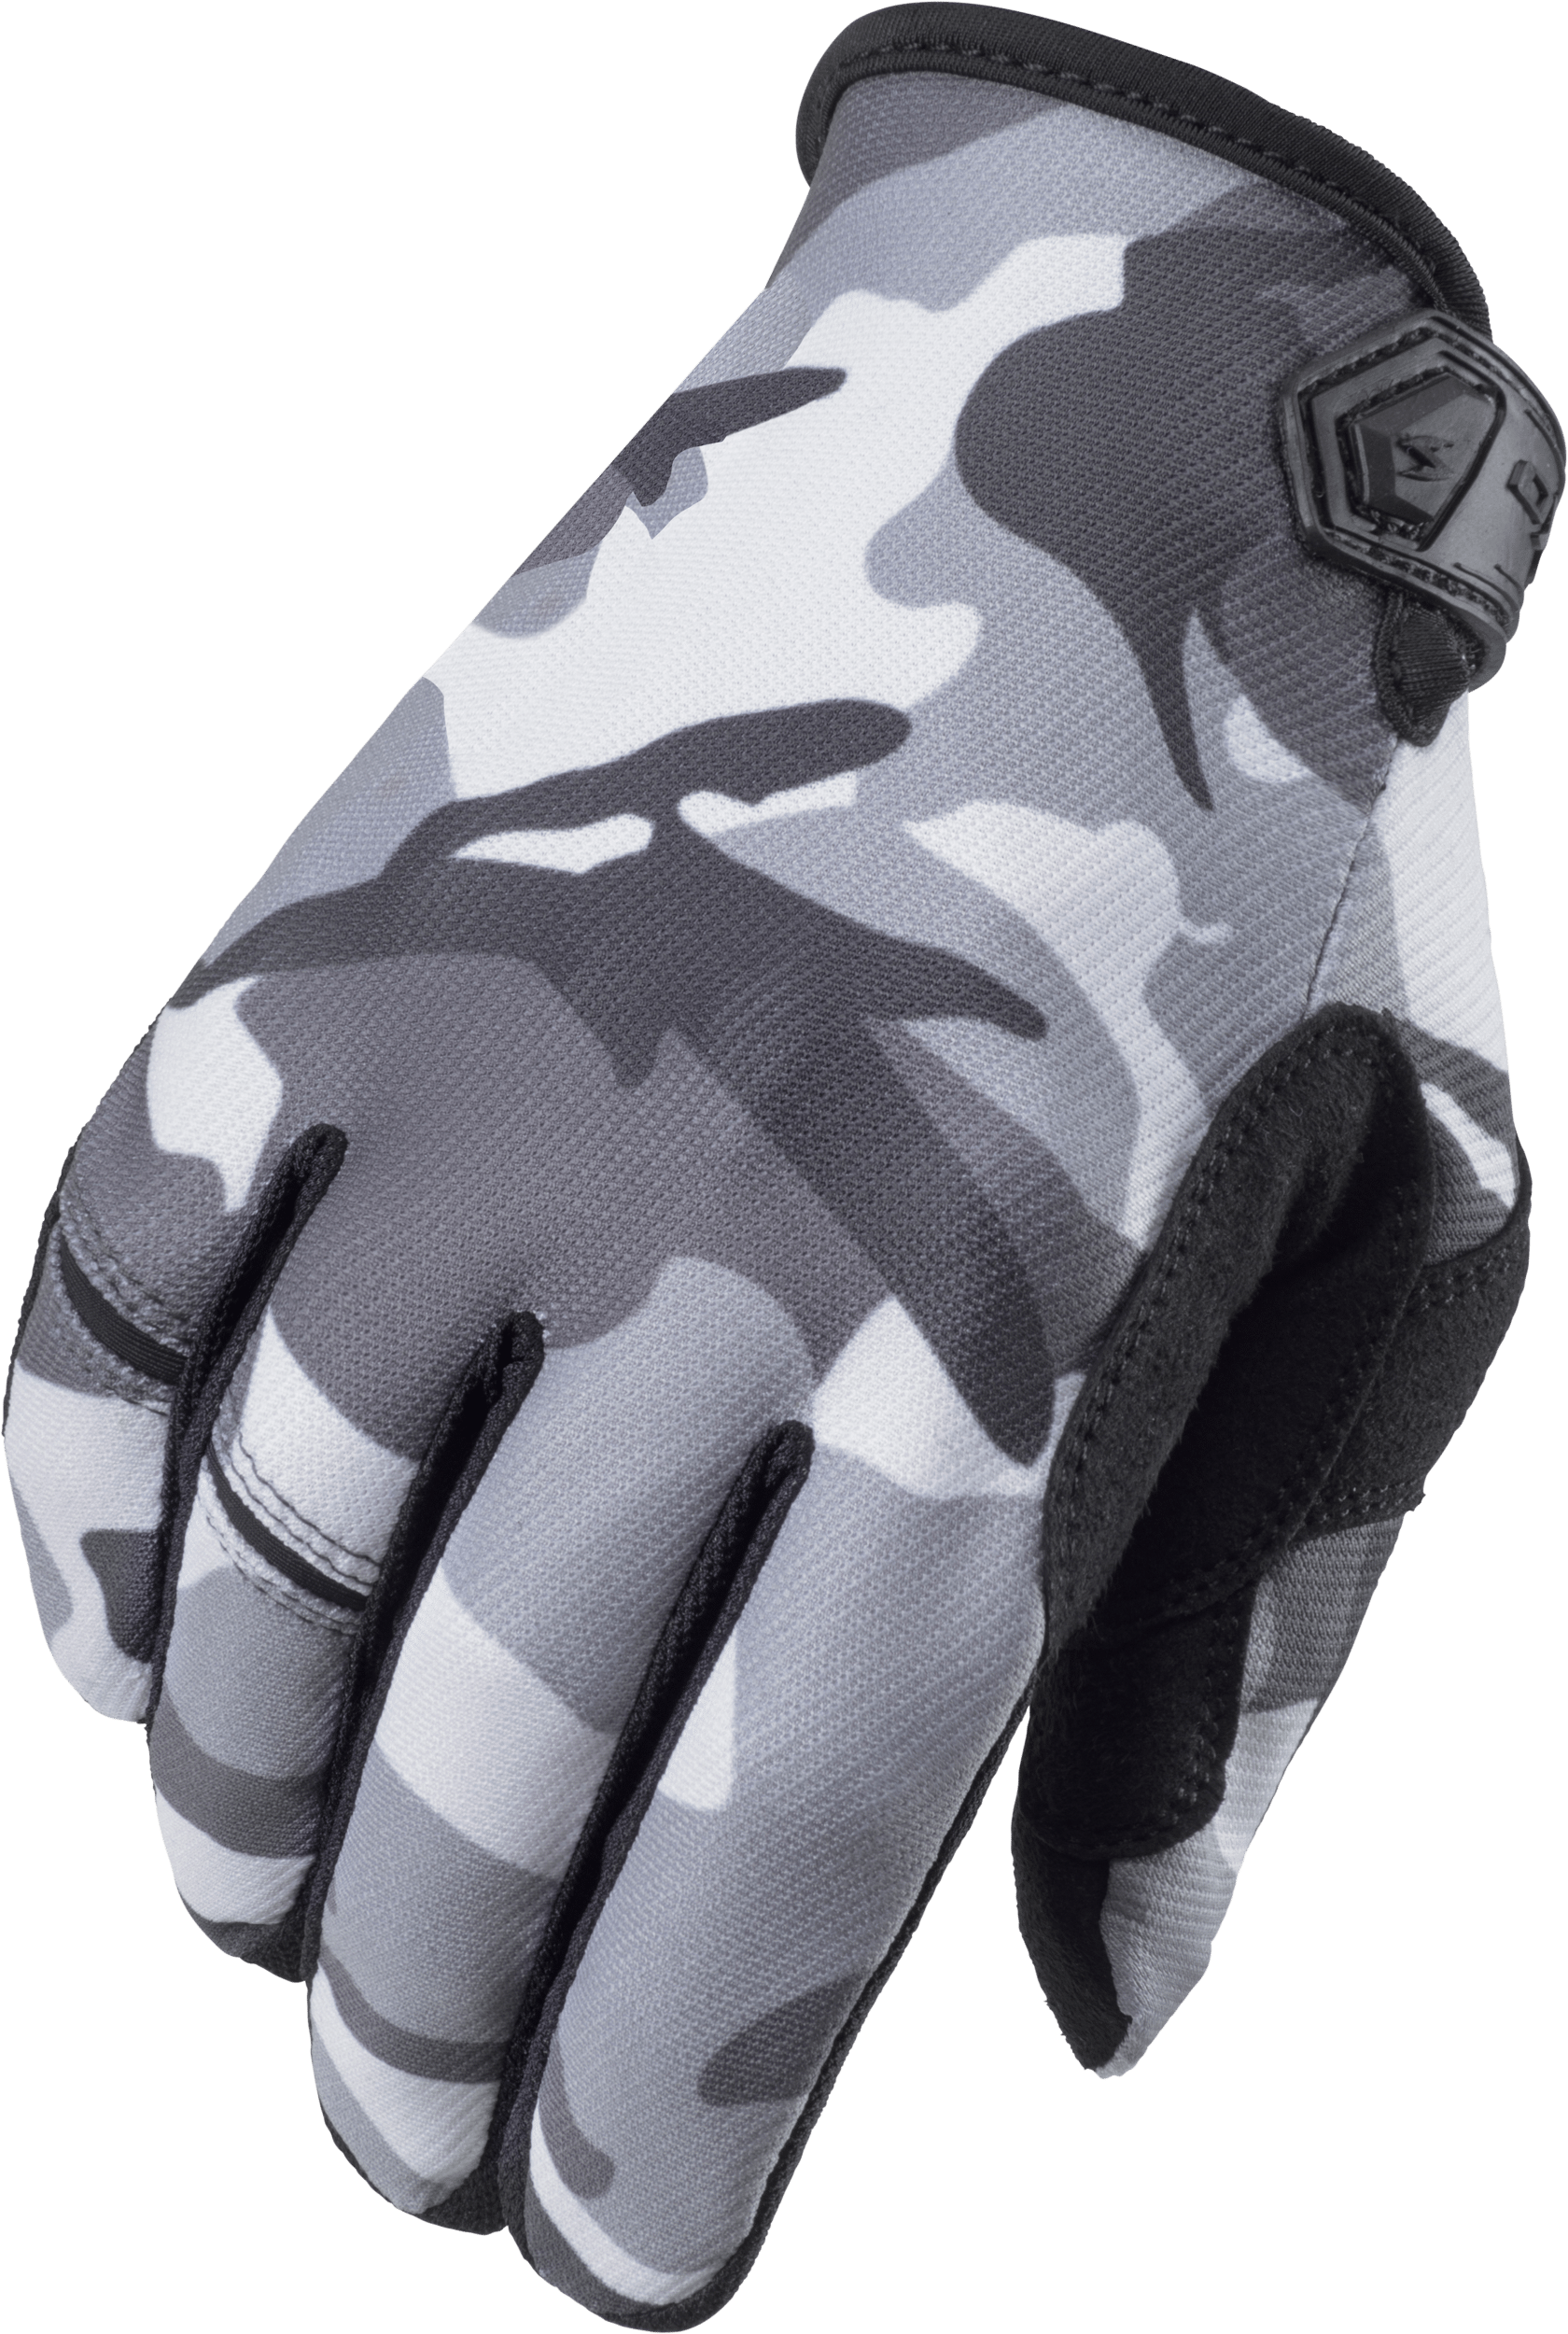 Western Powersports Gloves Ghost Grey / 2X-Large Moto-Flex Gloves by Scorpion Exo G70-407